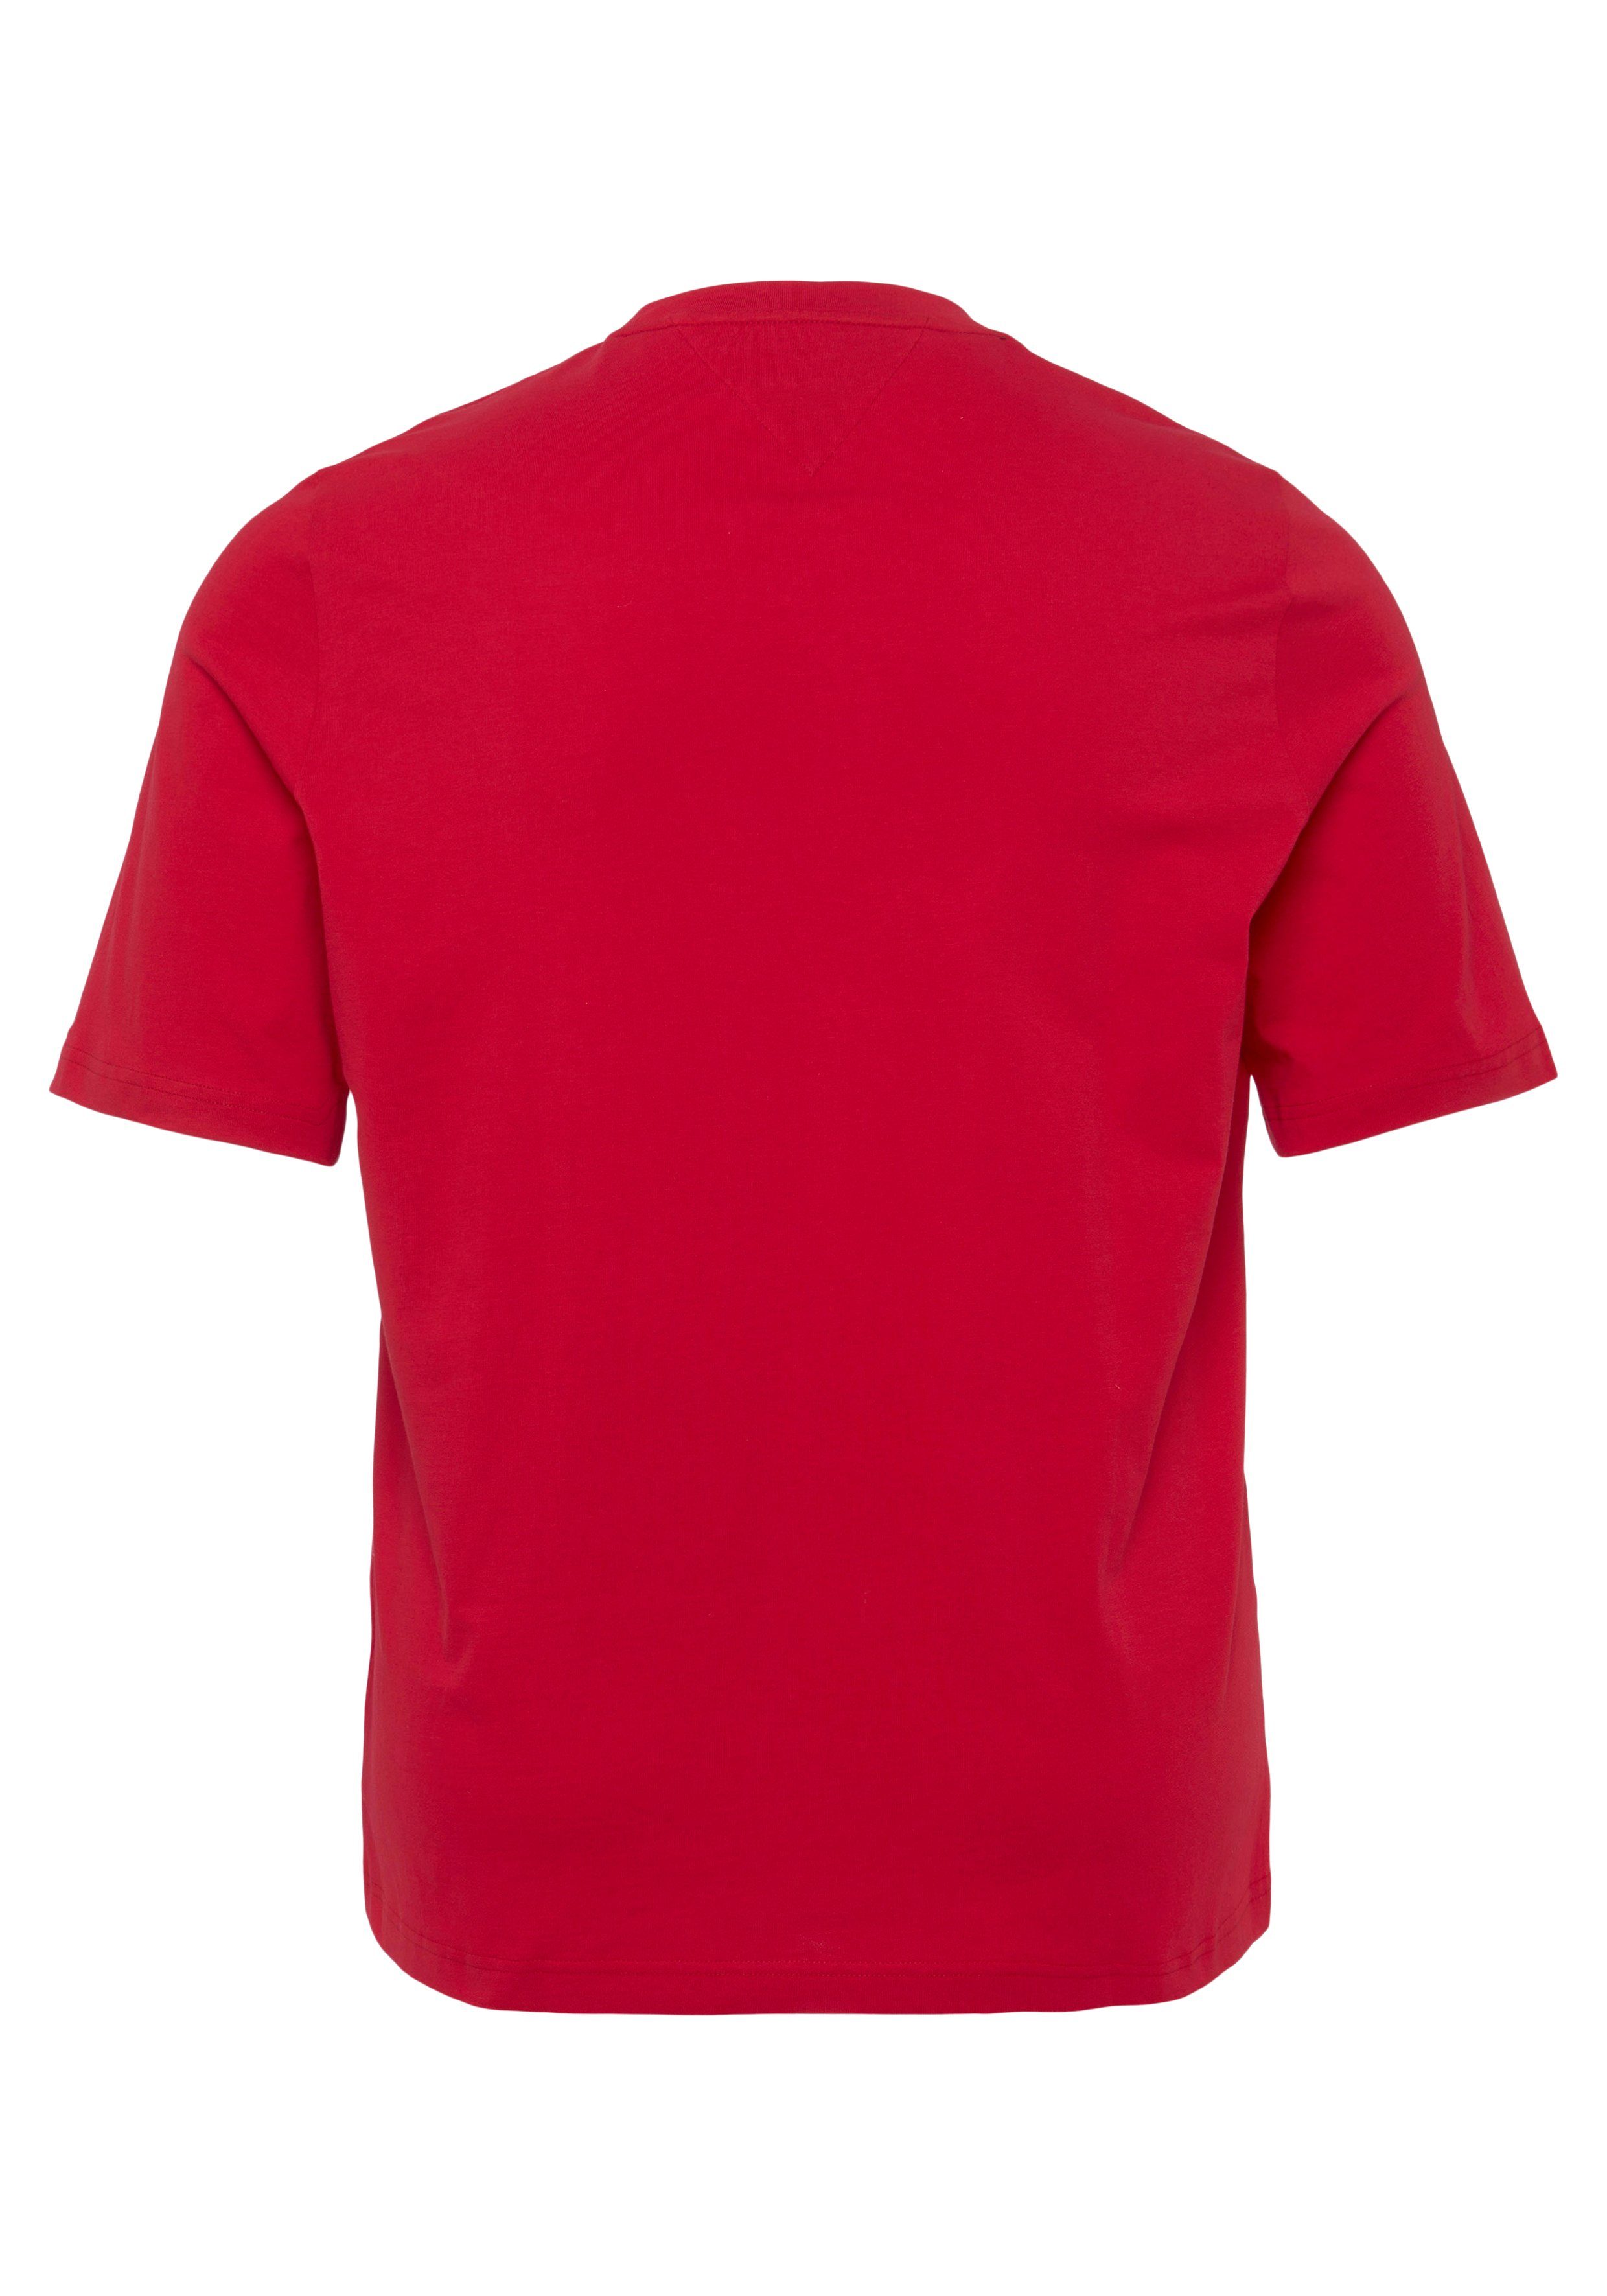 Tommy Hilfiger Big & Tommy auf Tall Hilfiger der T-Shirt LOGO mit rot TEE-B Brust BT-TOMMY Logoschriftzug